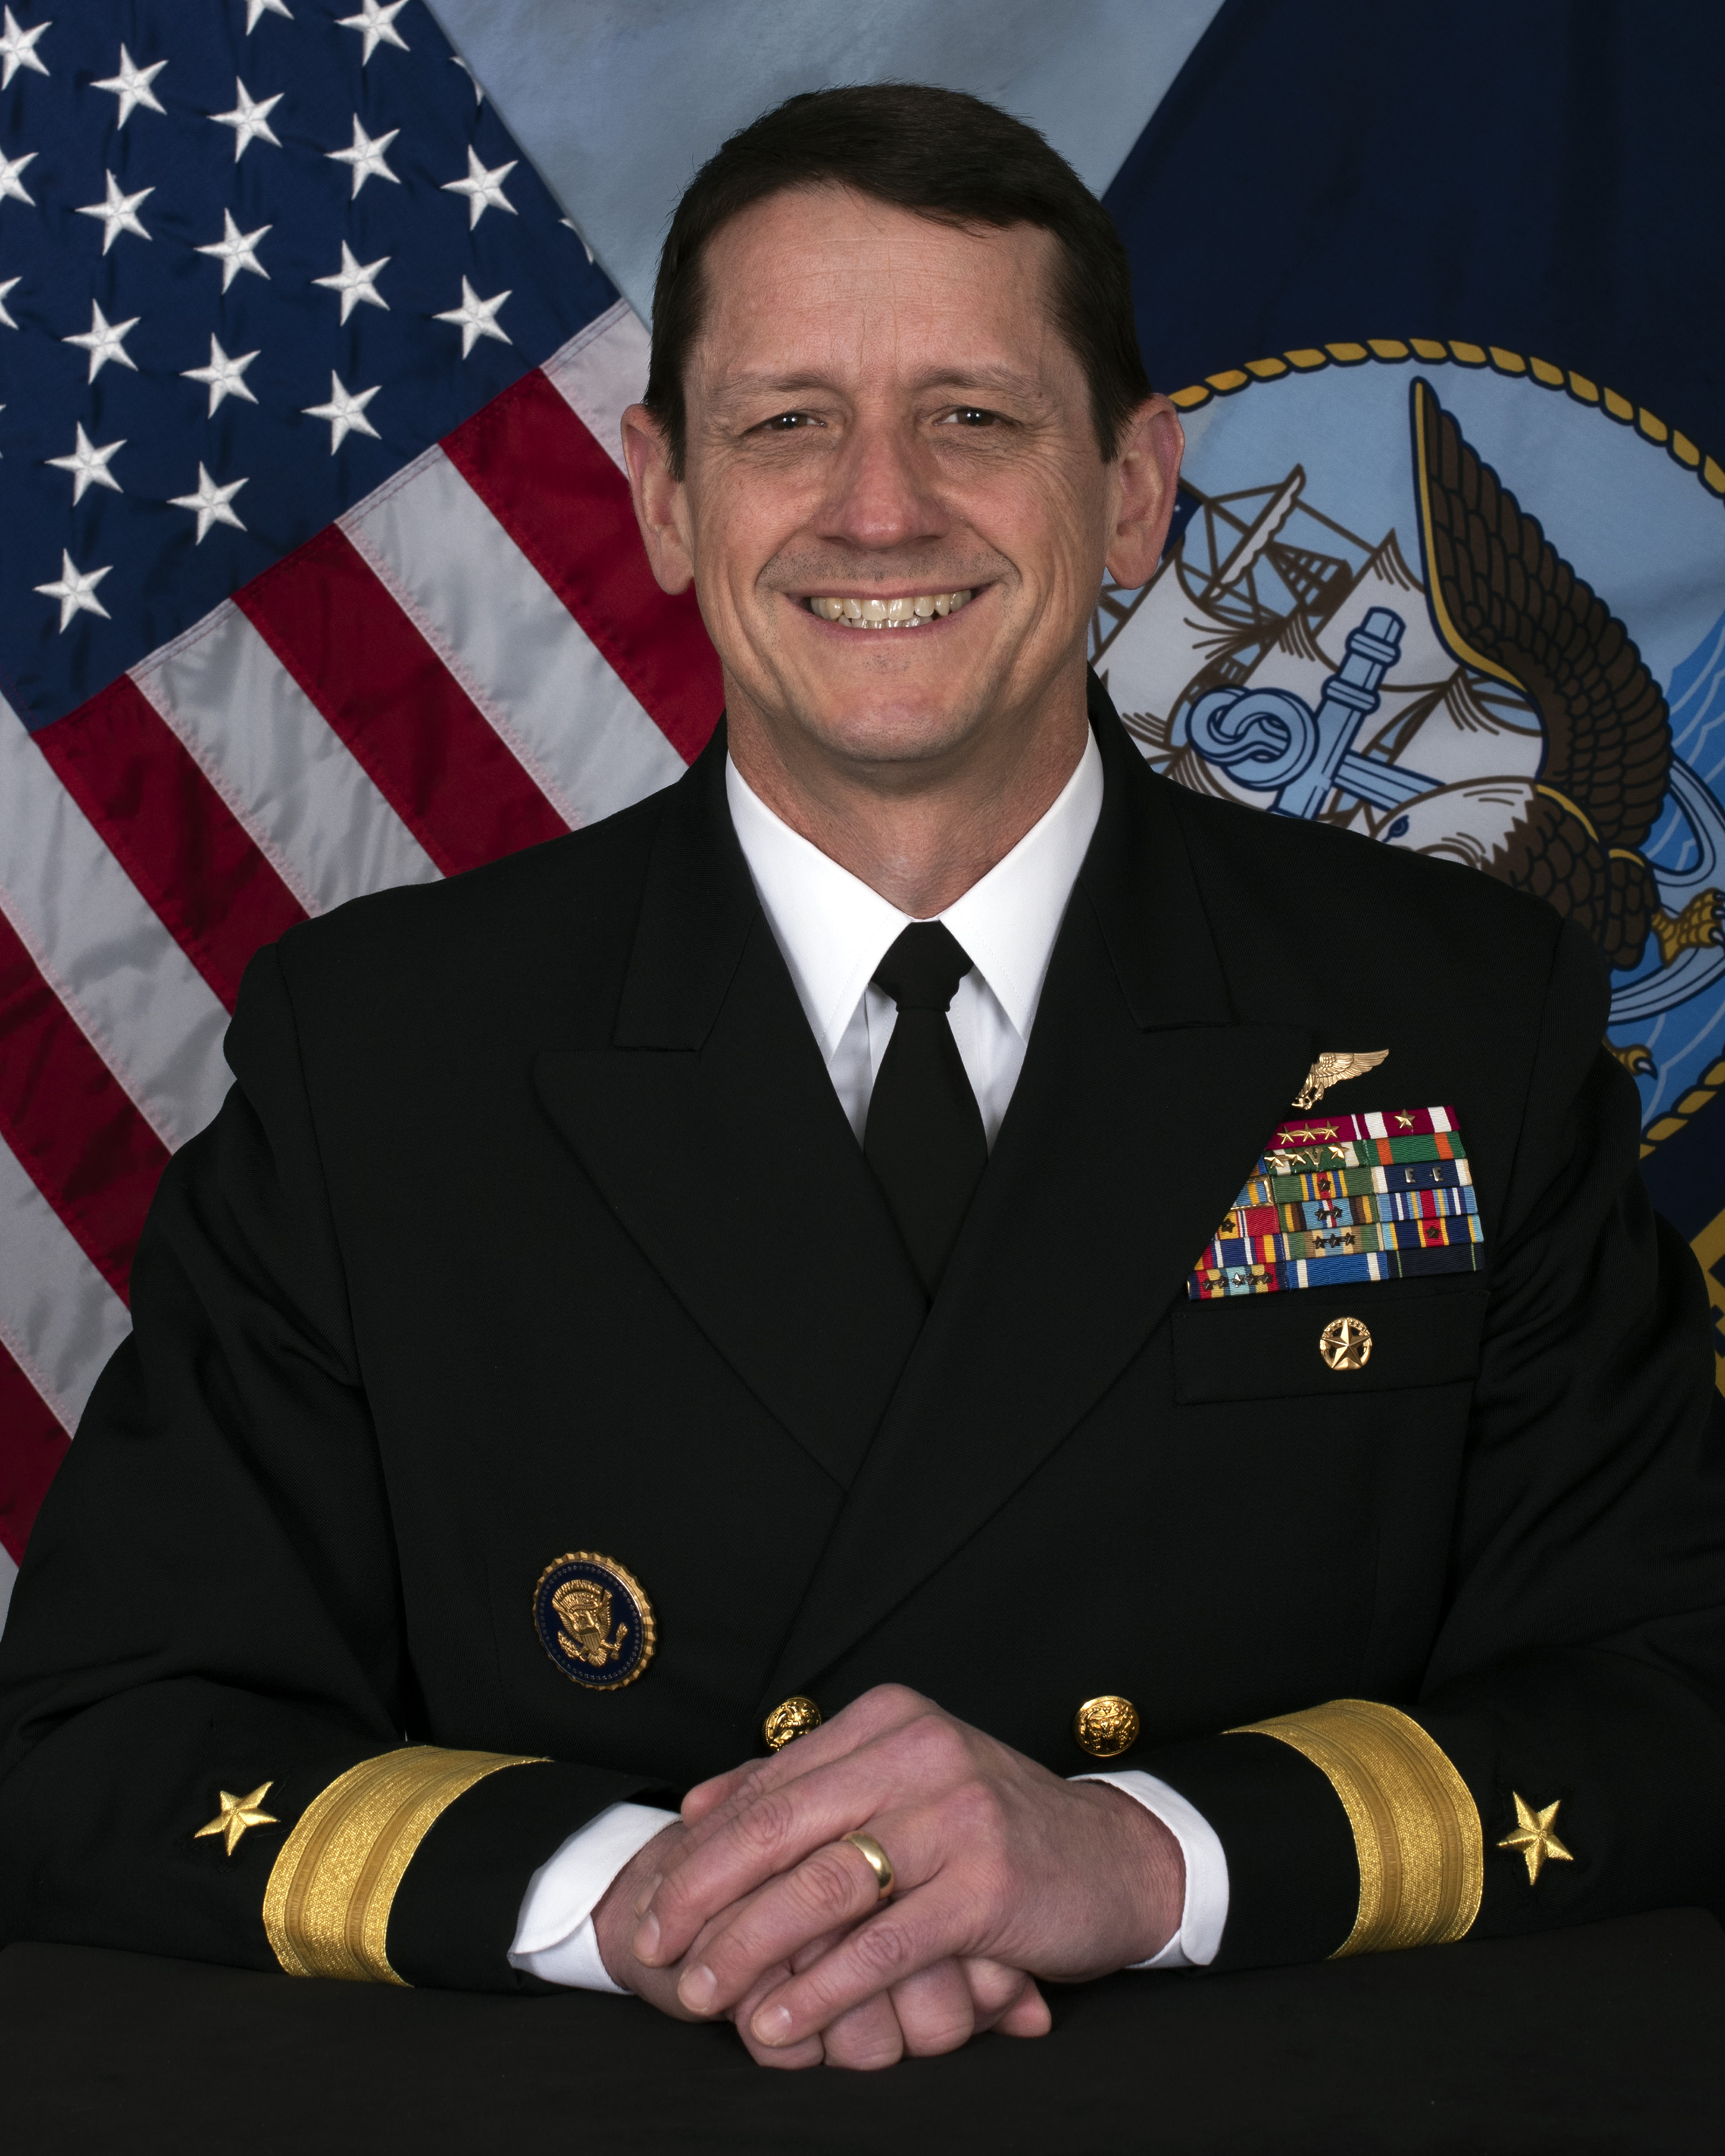 The next Guam admiral, NMI updates, Guam Rev&Tax stats, and more